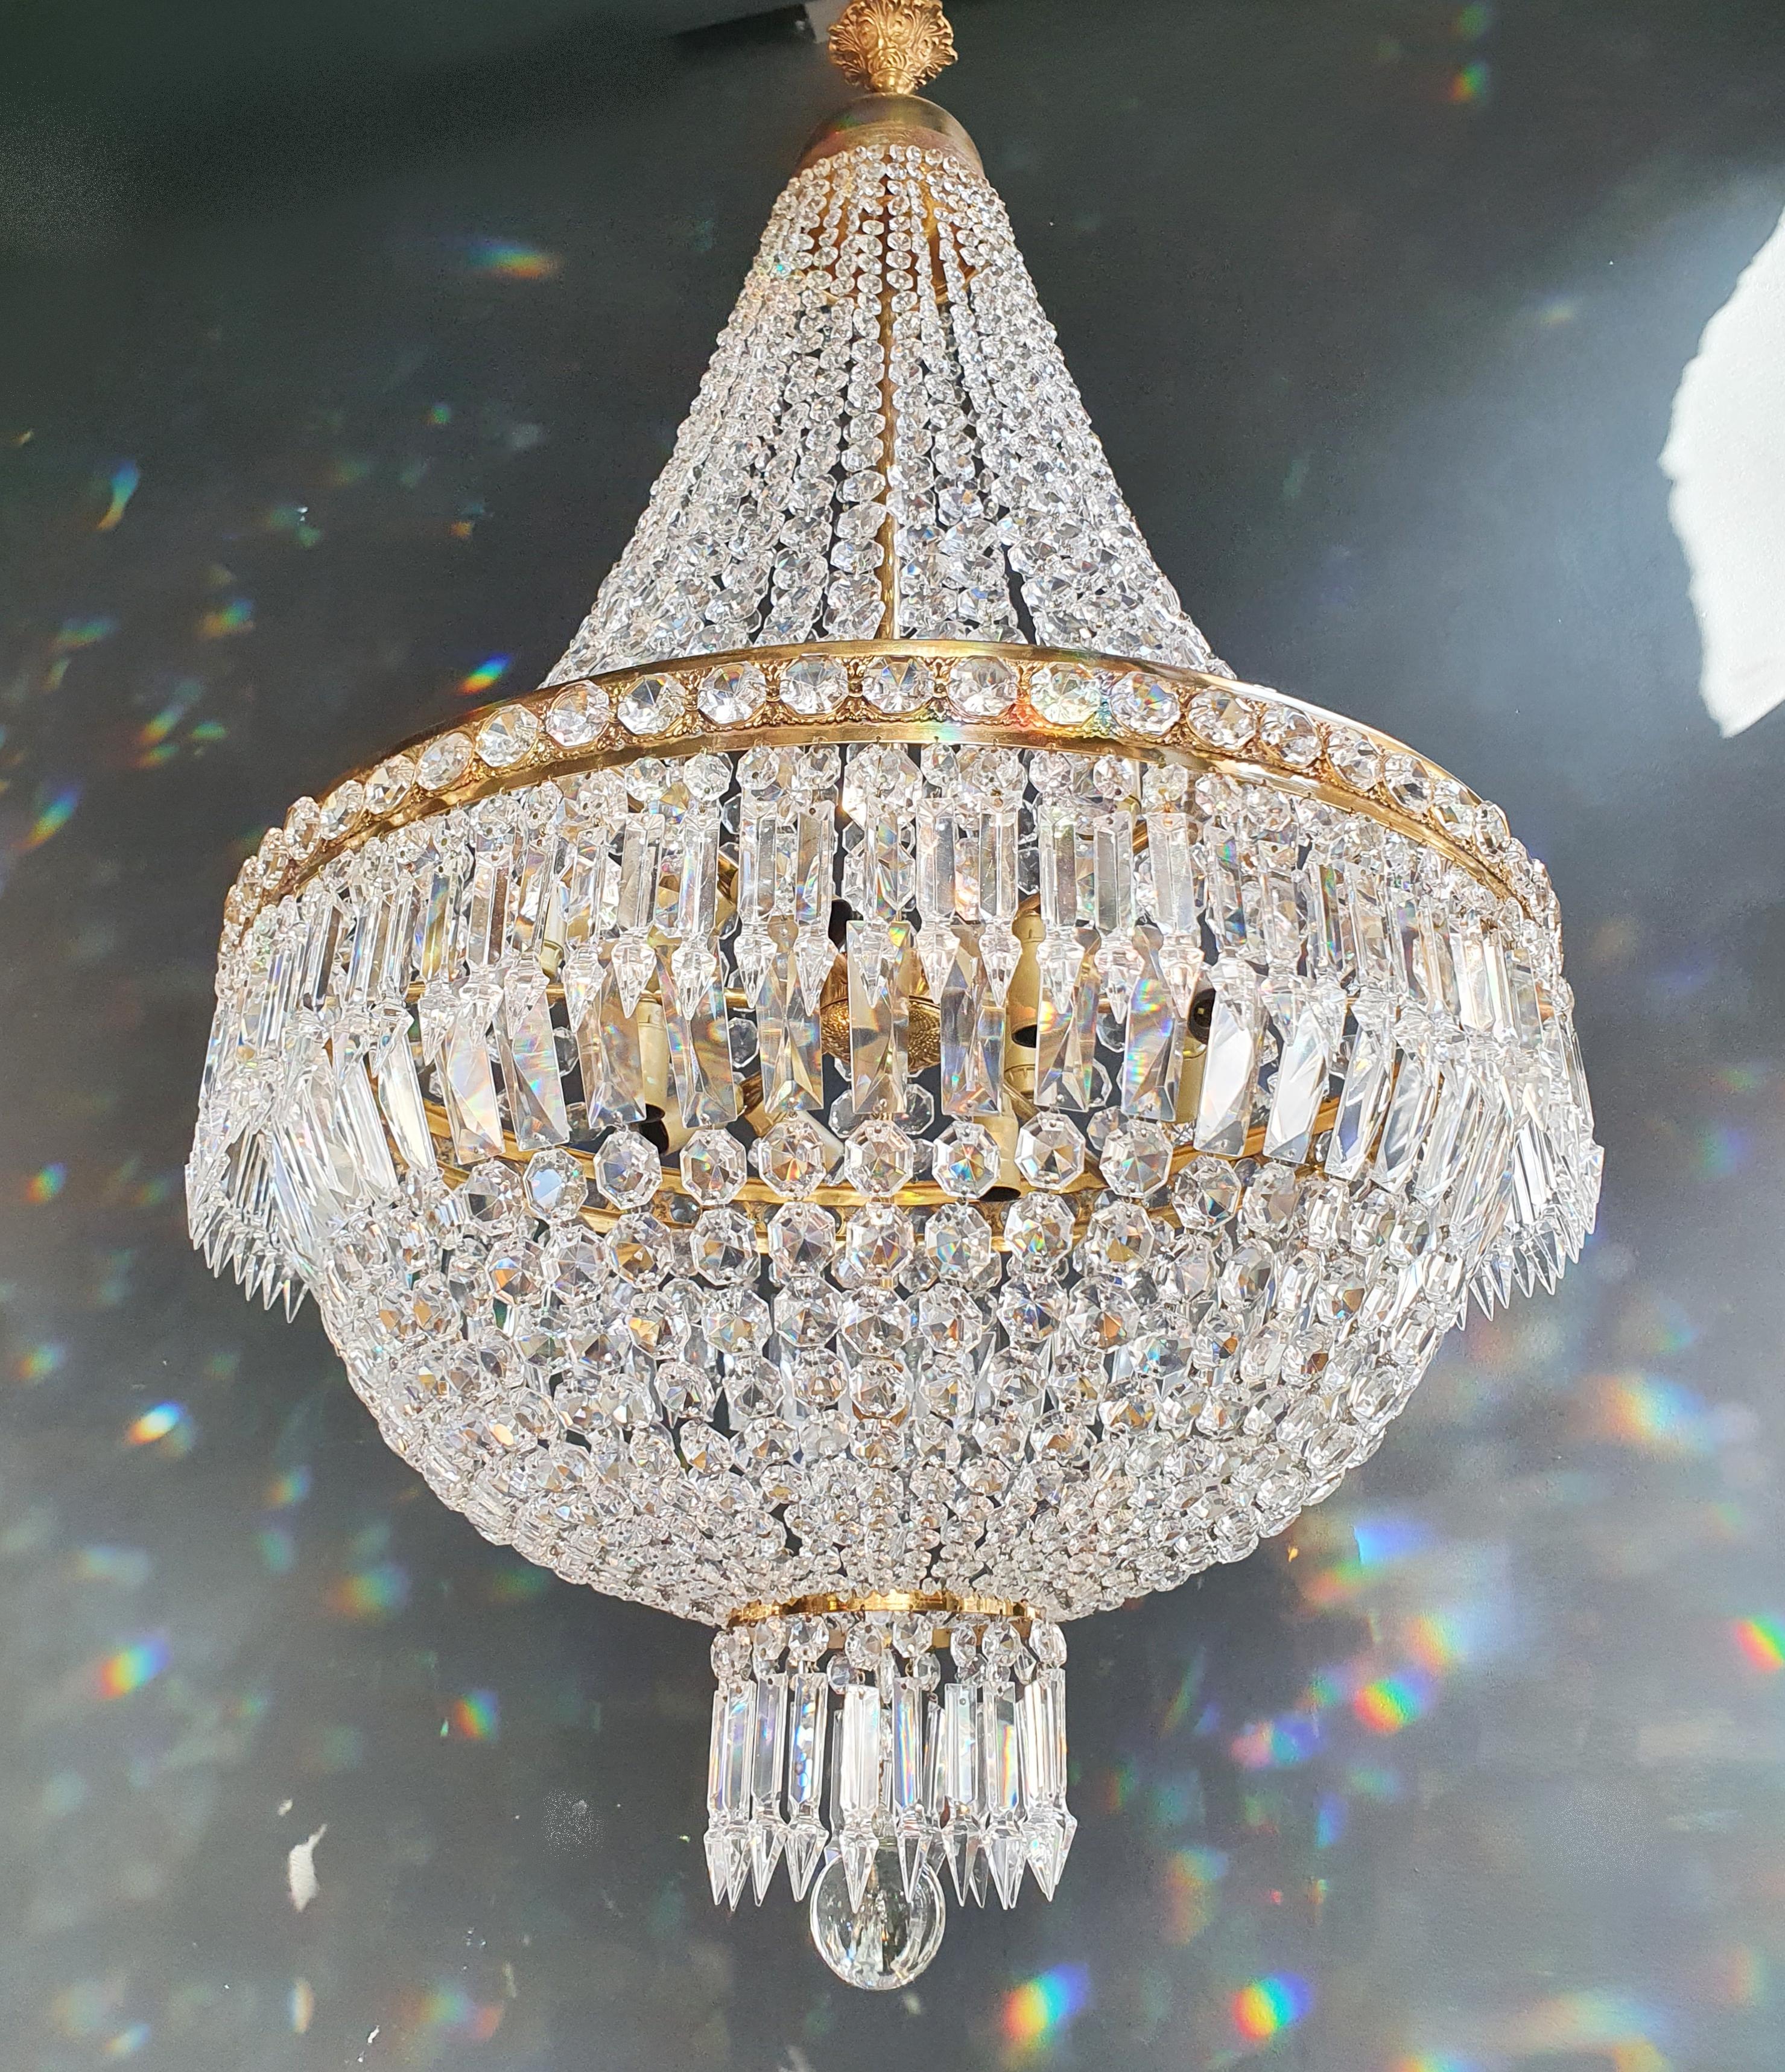 Montgolfiè Empire Brass Sac a Pearl Chandelier Crystal Lustre Ceiling Antique 3